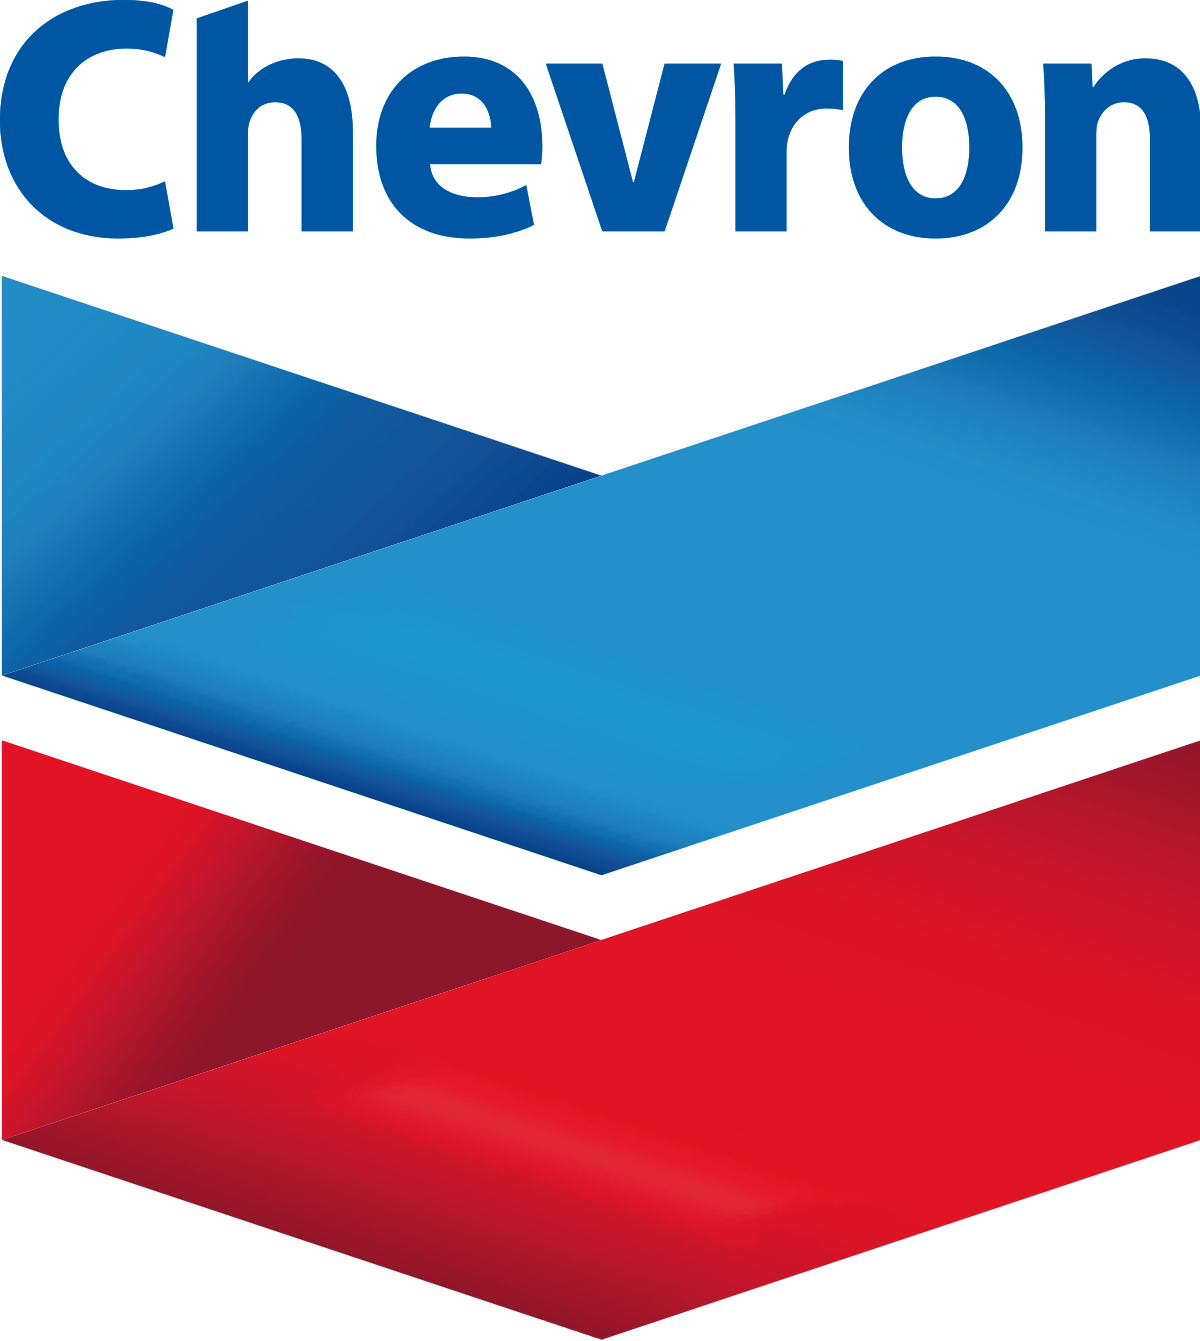 Chevron Corporation Logo - Chevron Corporation